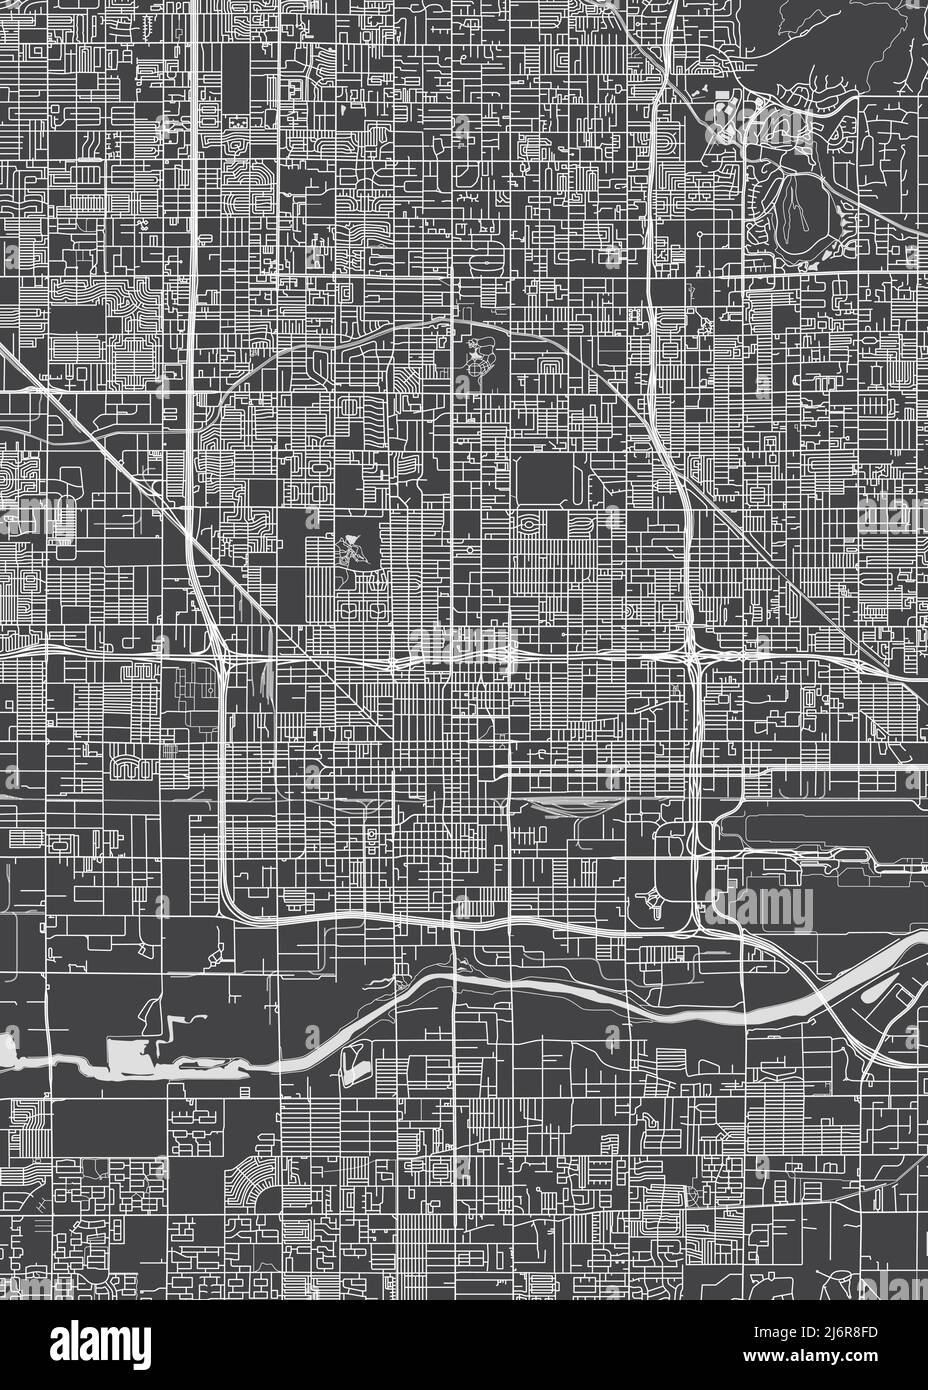 Stadtplan Phoenix, monochromer Detailplan, Vektorgrafik Stock Vektor